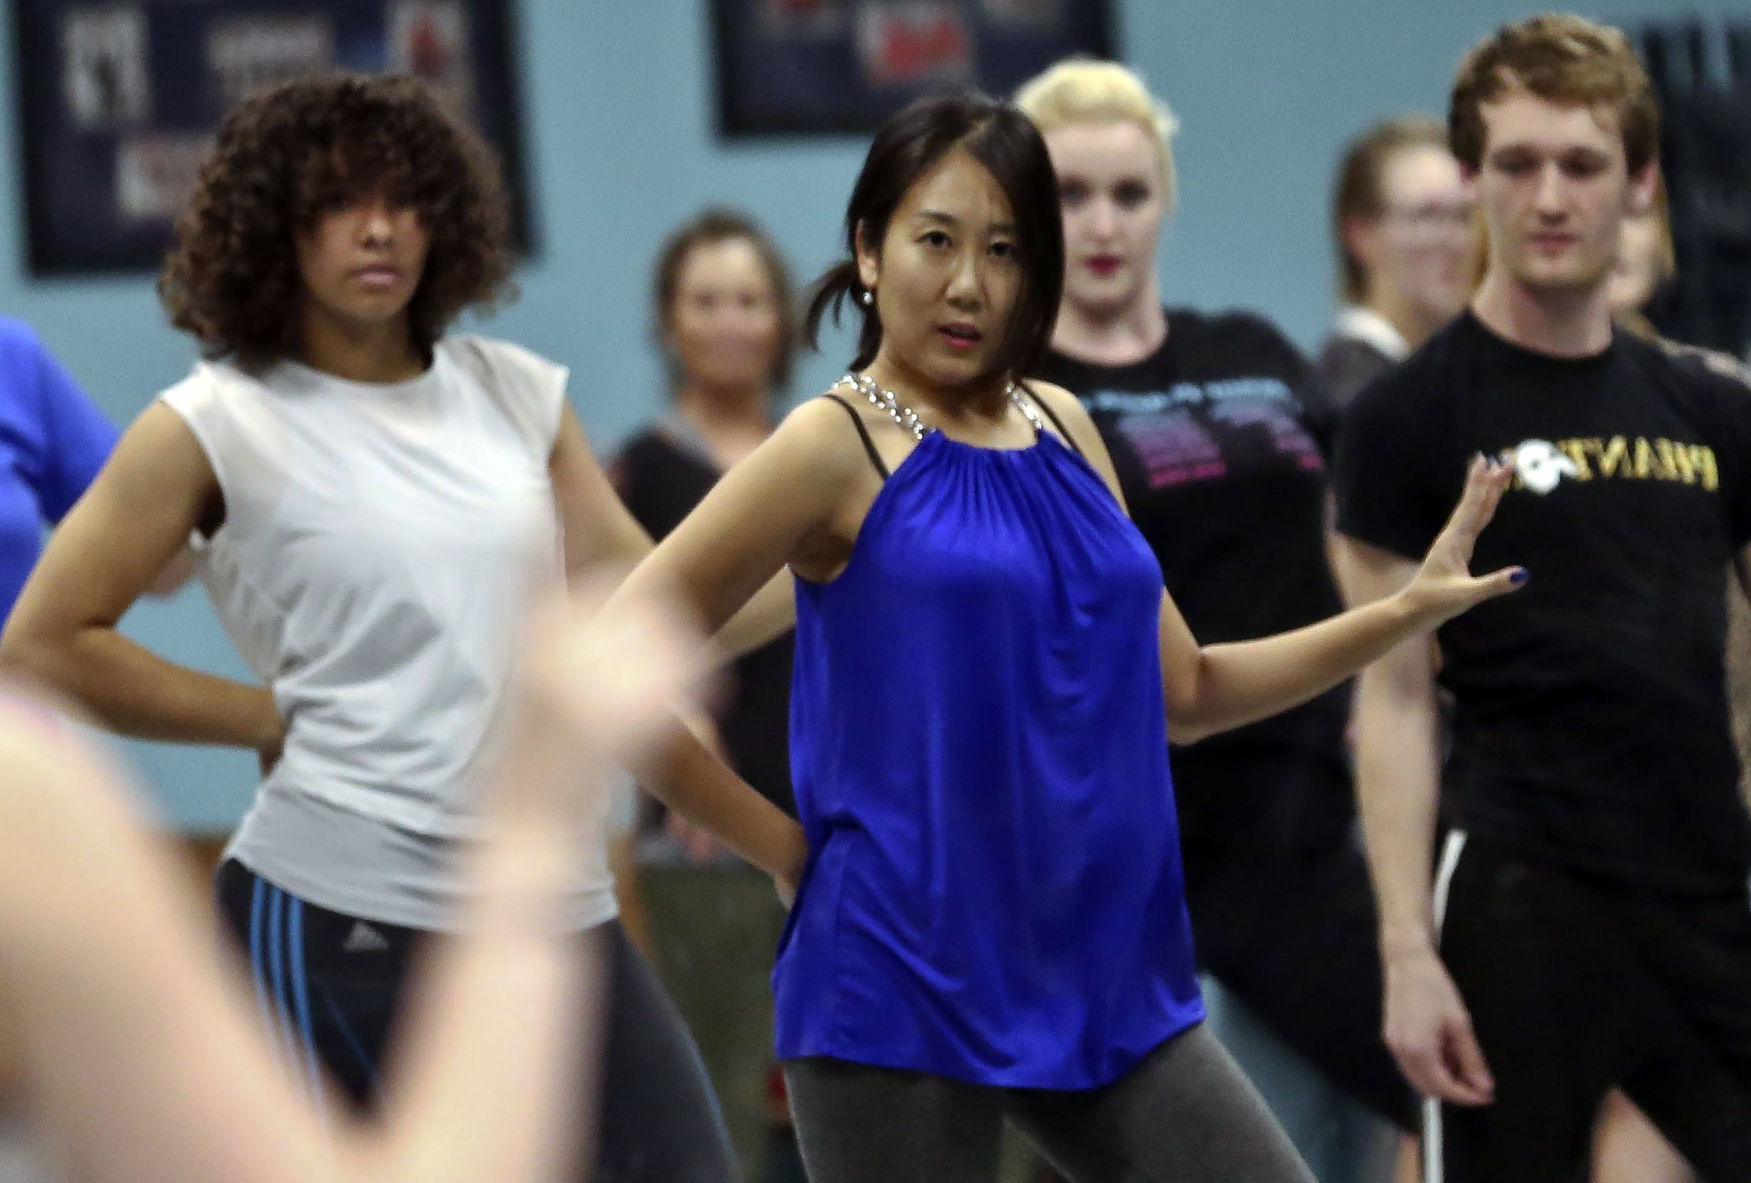 K-pop dancer brings high-energy moves to Decatur Park District program